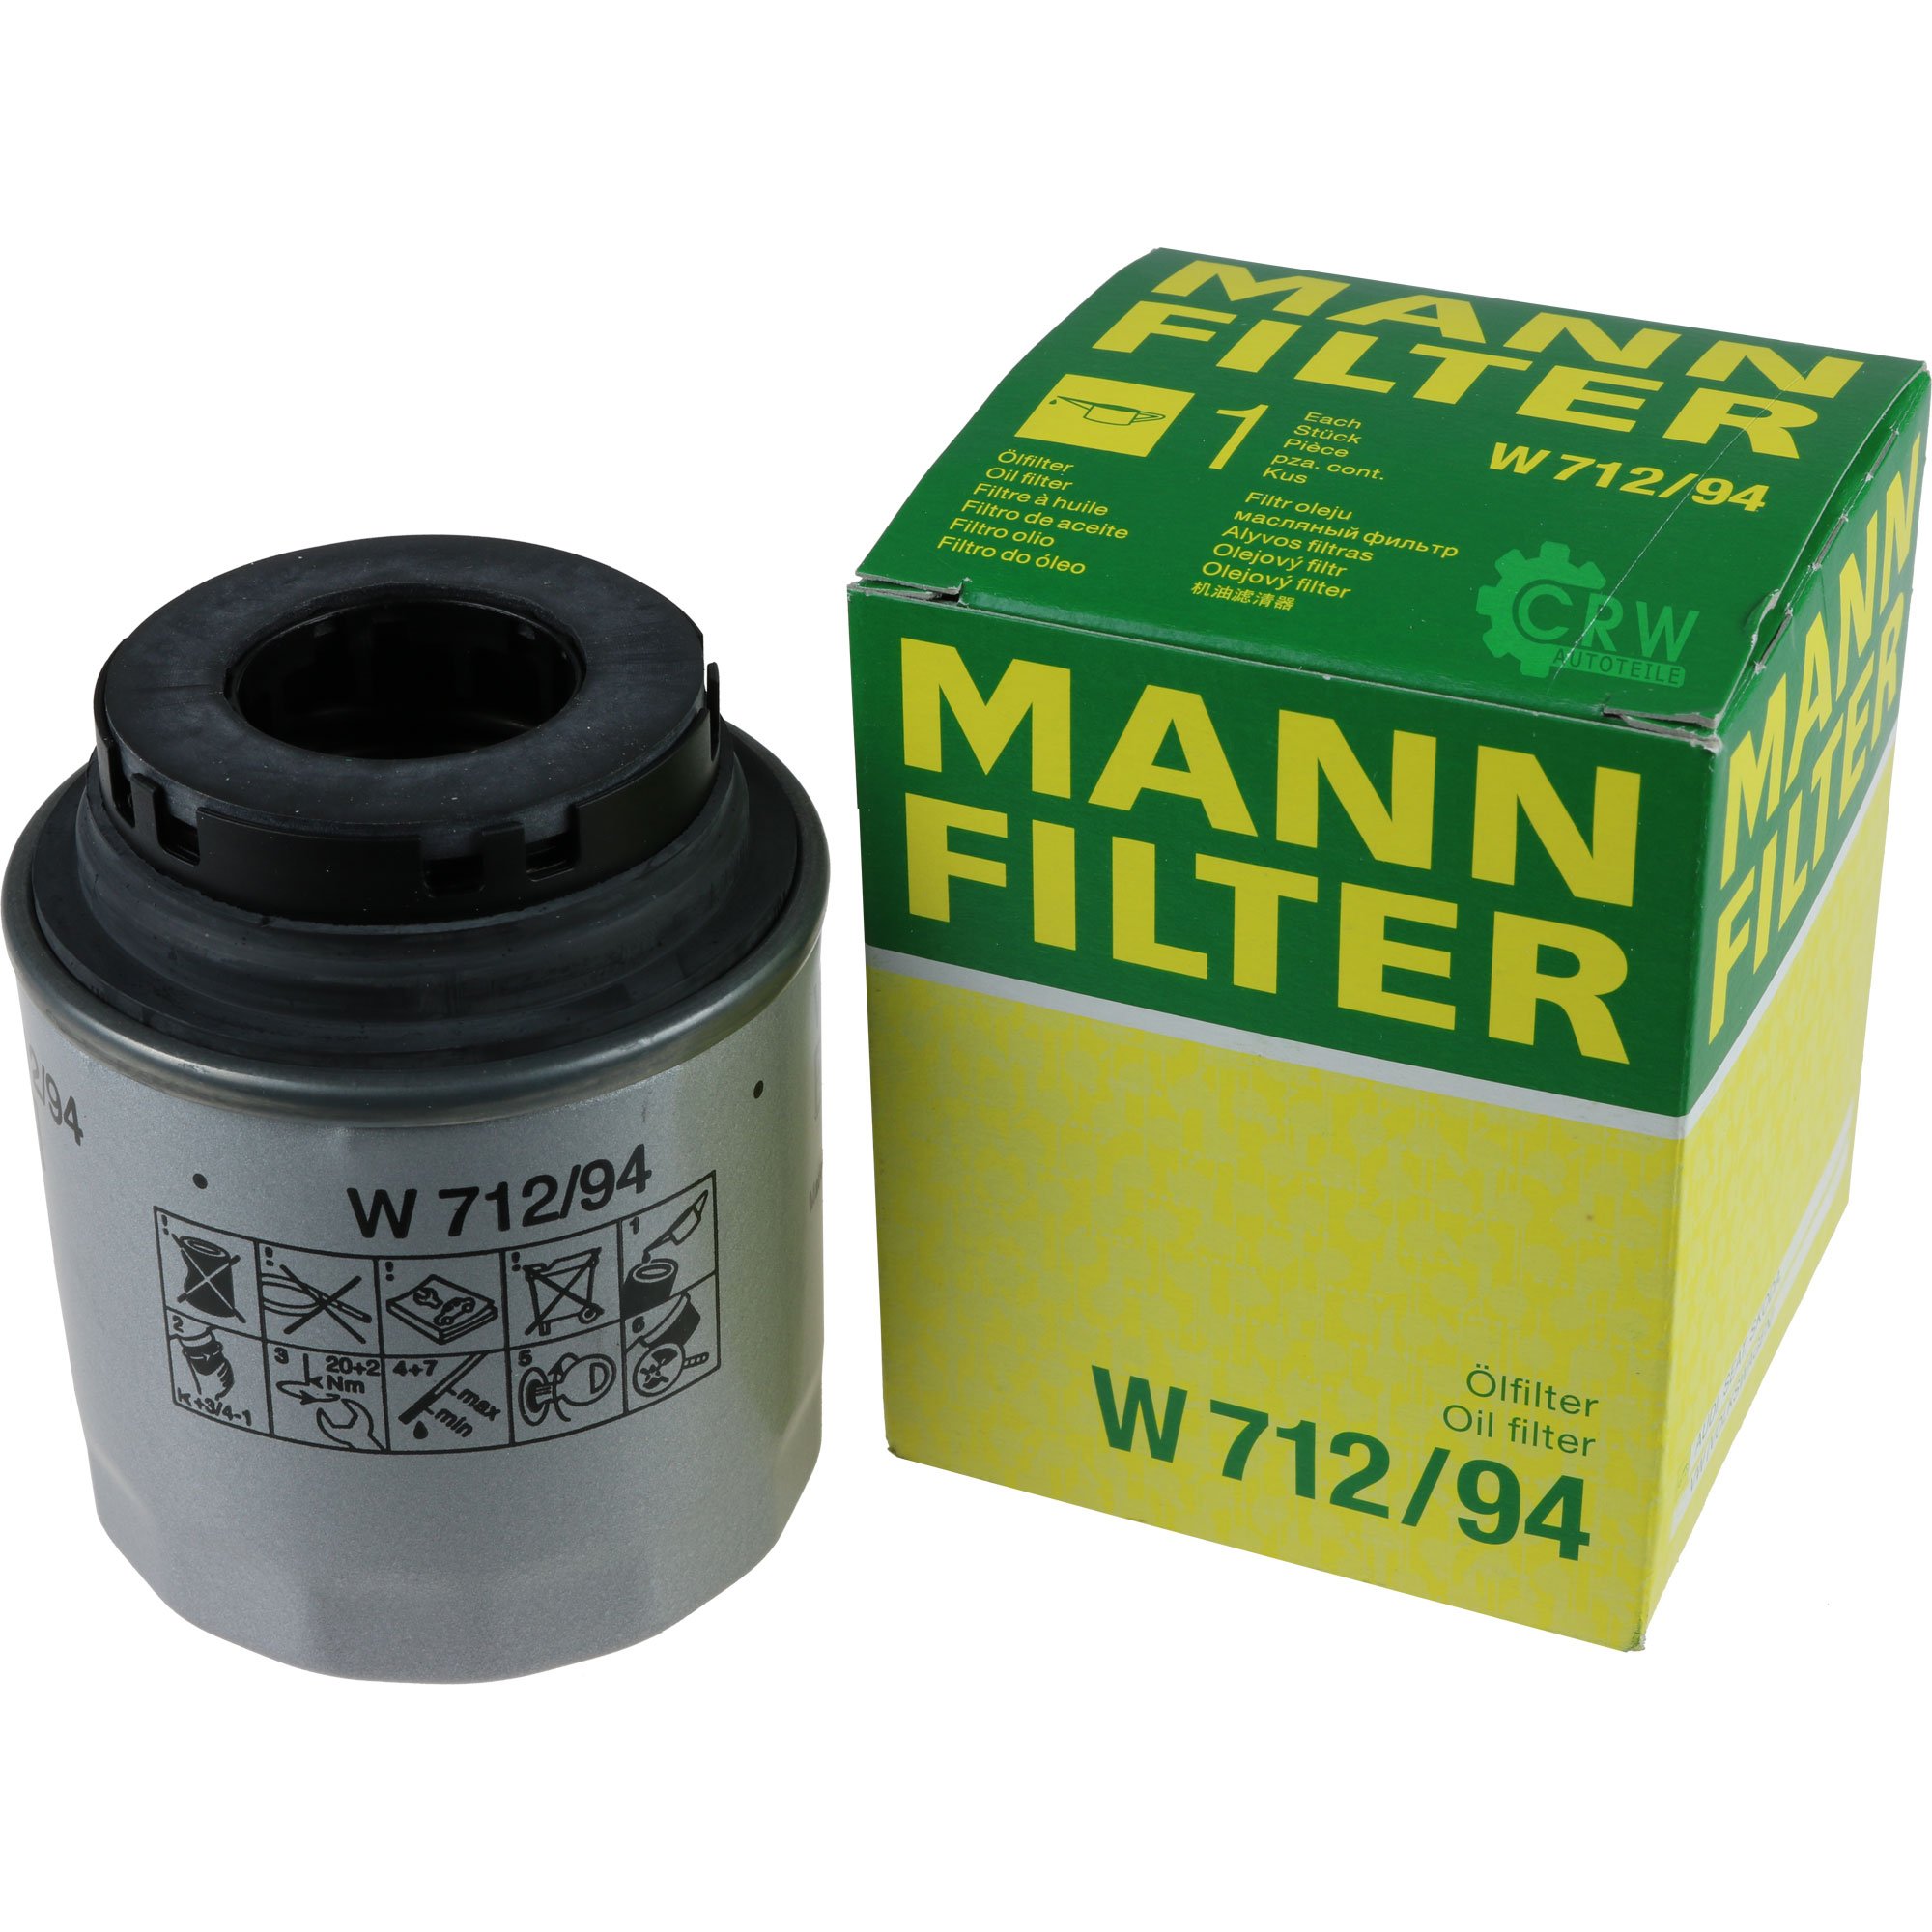 Масляный фильтр манн оригинал. W71294 Mann. W71294 фильтр масляный. Mann-Filter w 712/94. Фильтр масляный Mann w712.